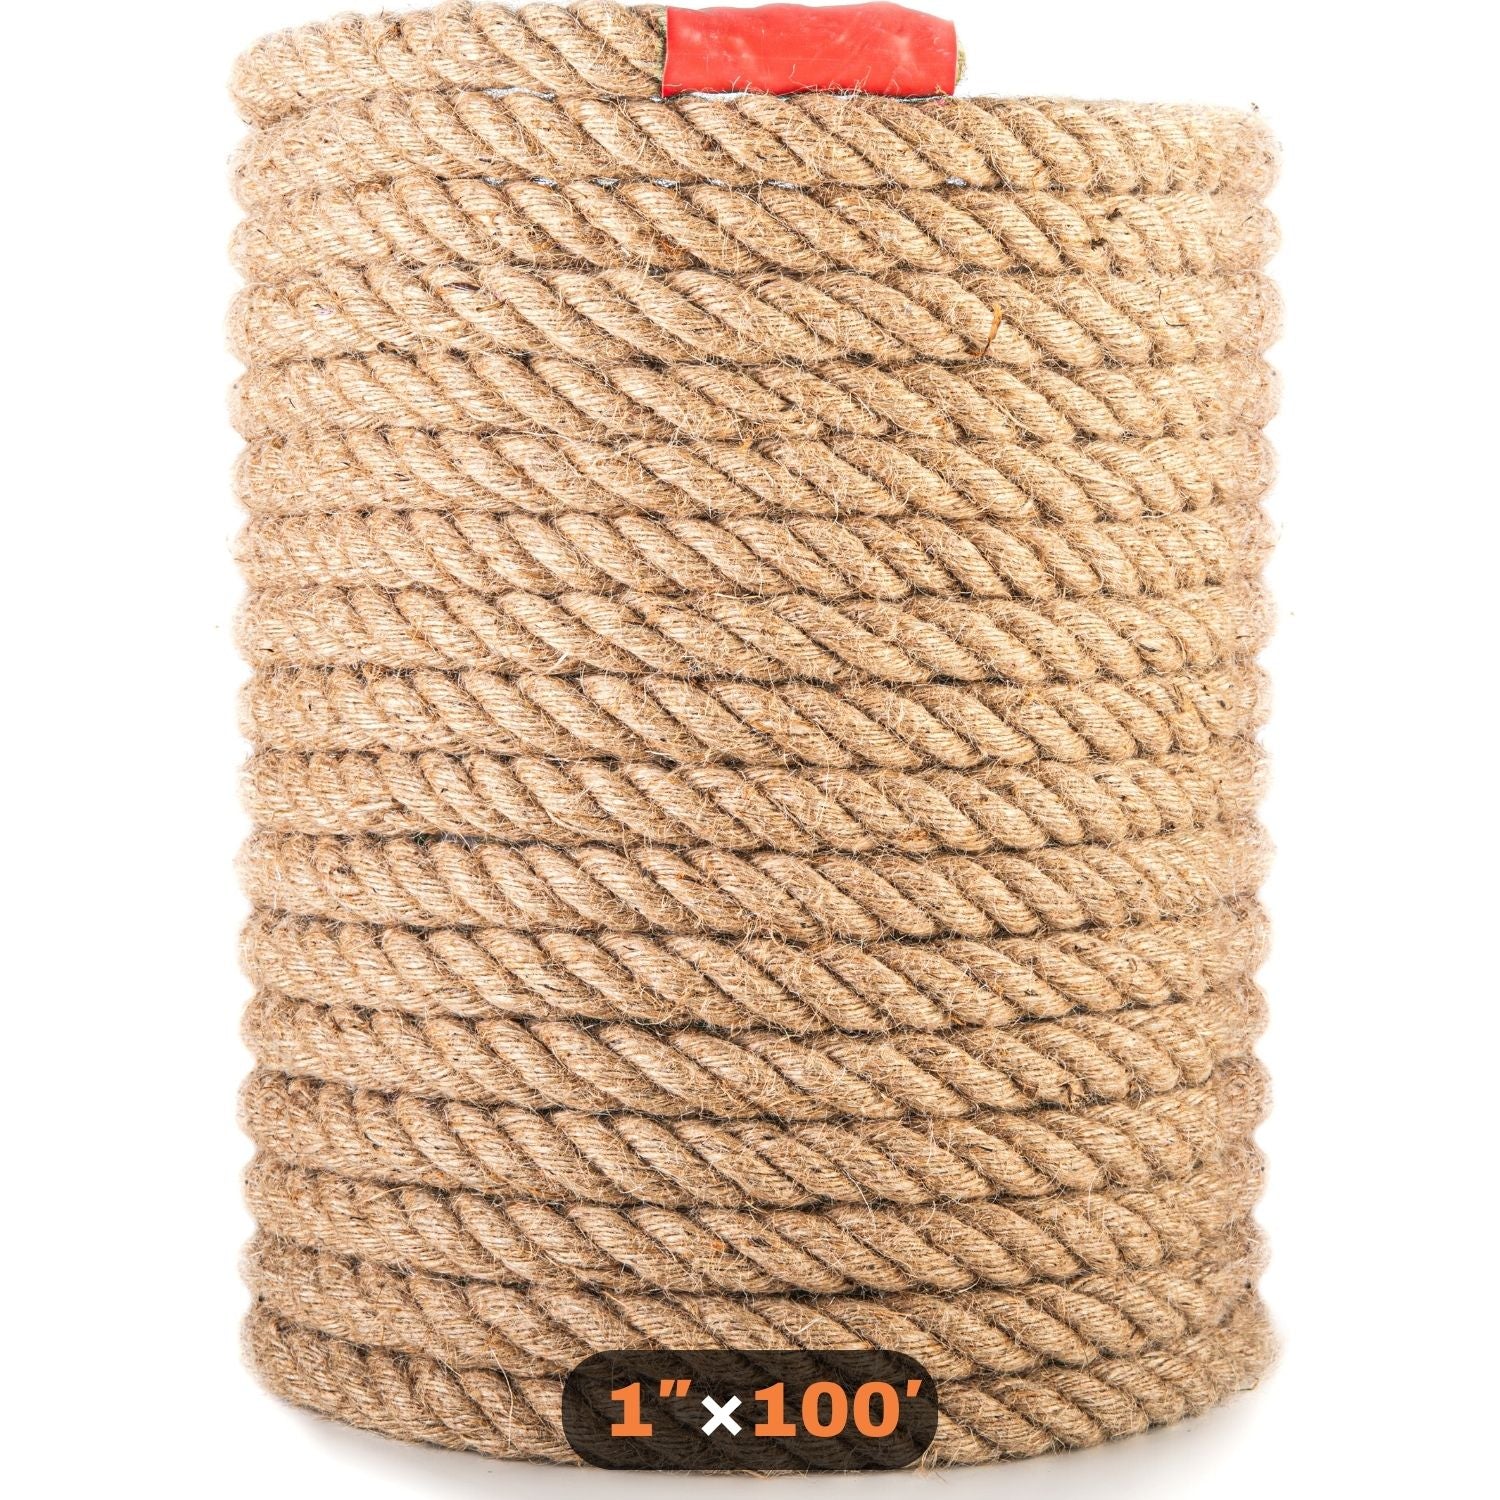 Manila Rope 1″×100′- Nautical Ropes - Natural Jute Rope - Large Decorative Hemp Rope - Thick Heavy Duty 